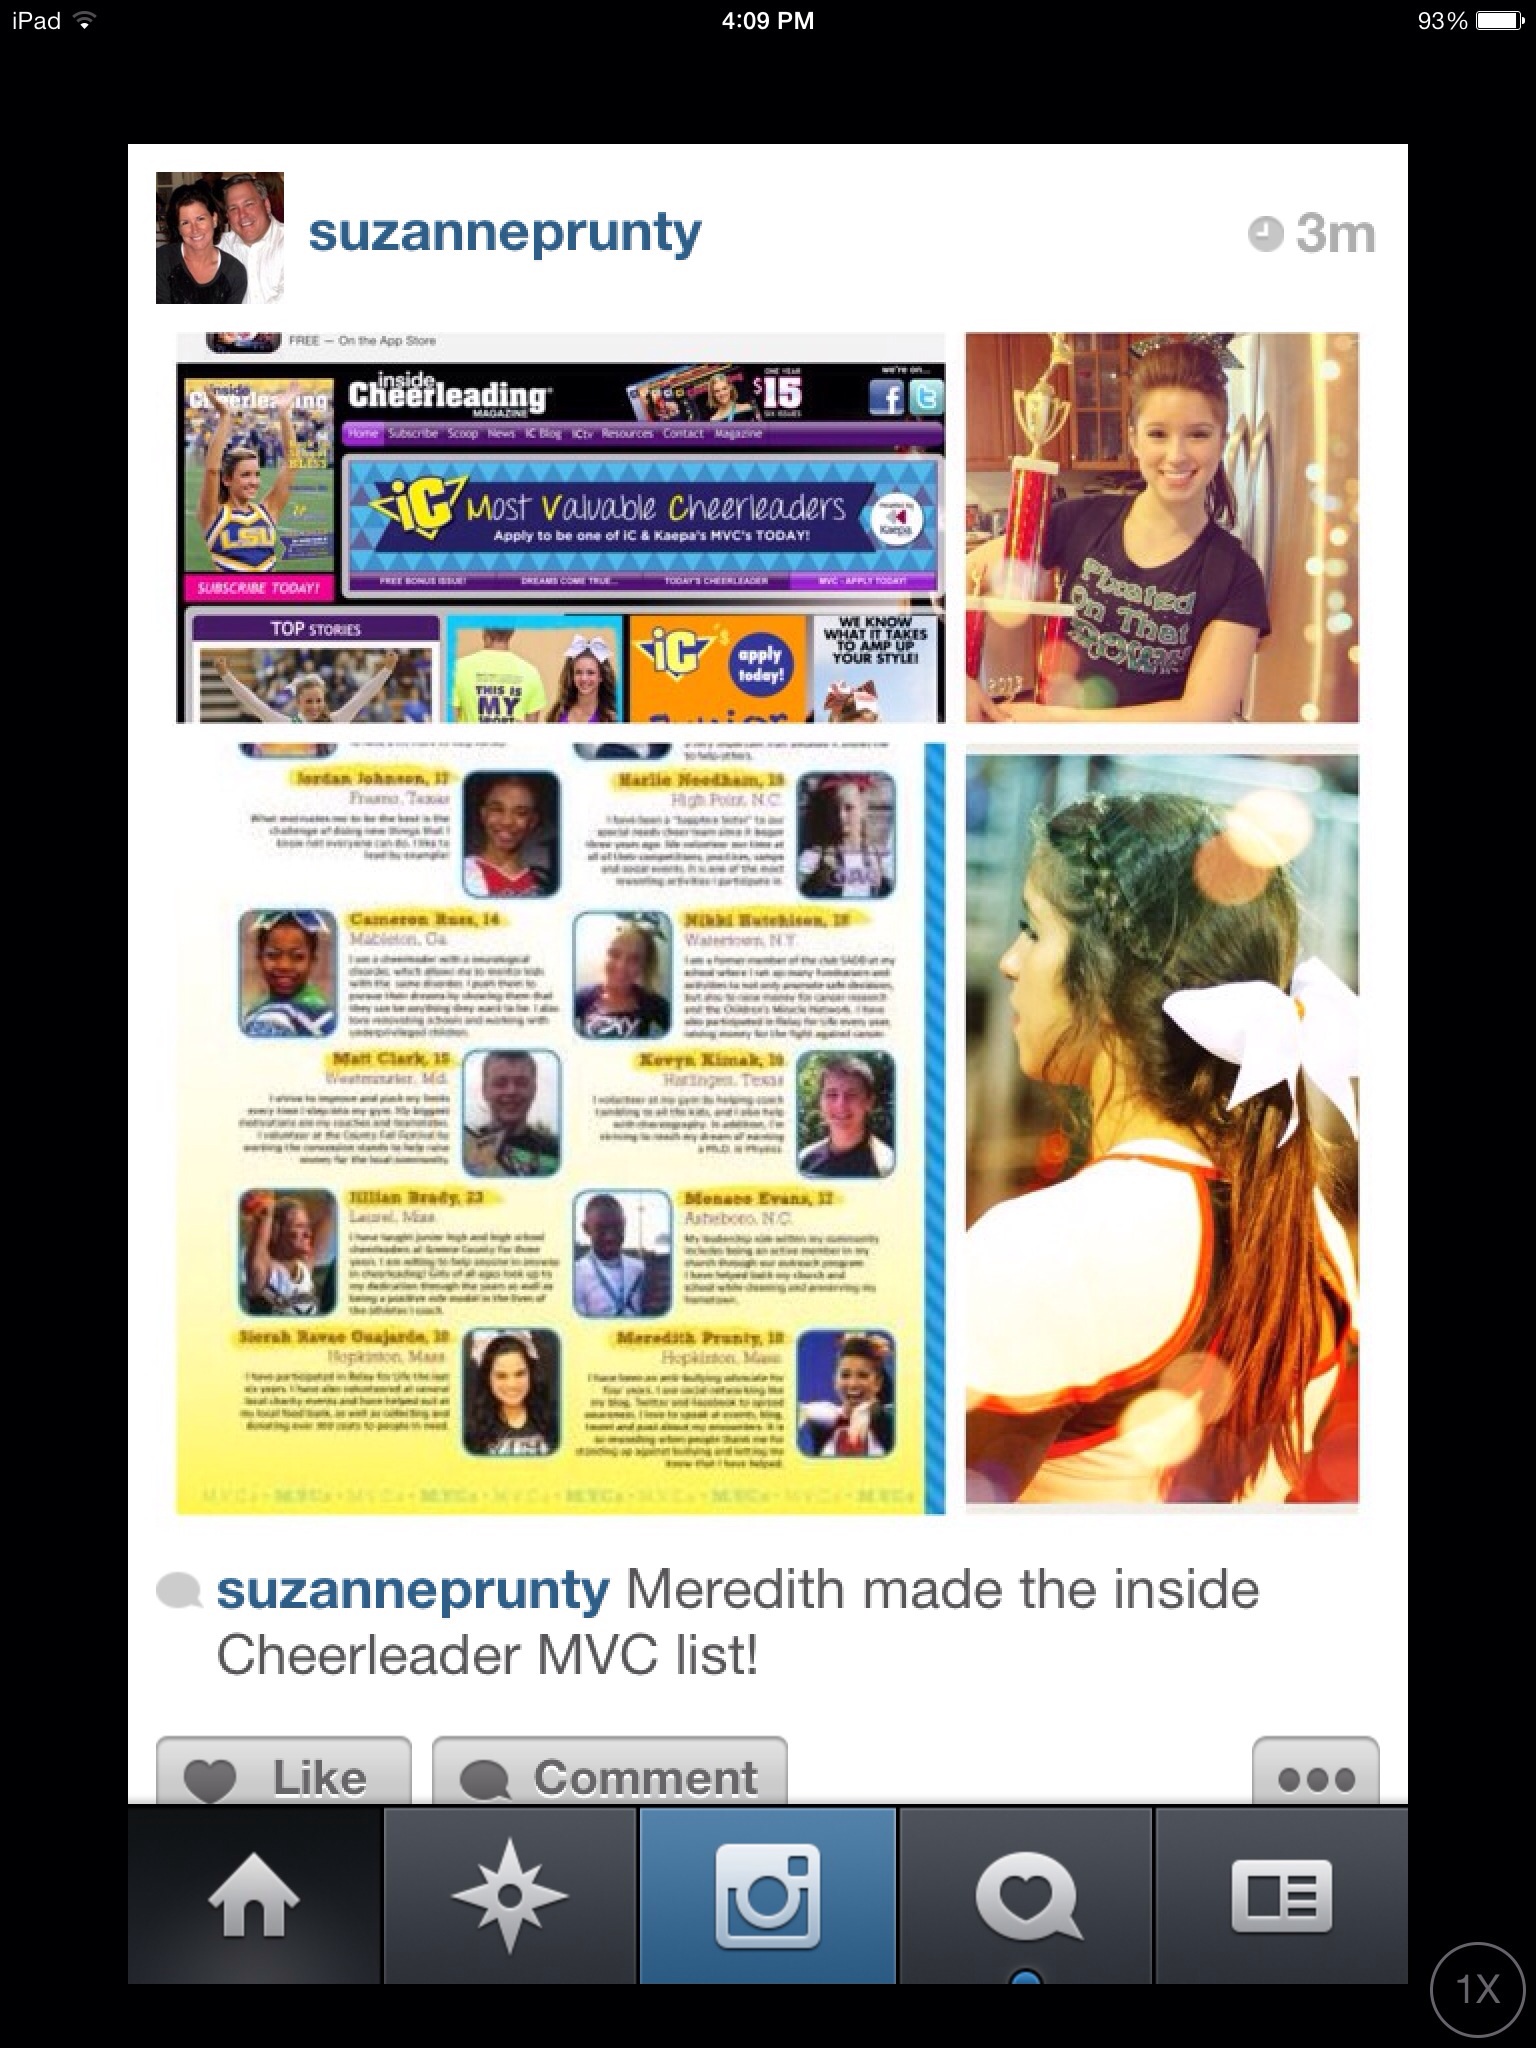 Inside Cheerleading Magazine Most Valuable Cheerleader (MVP) 2013